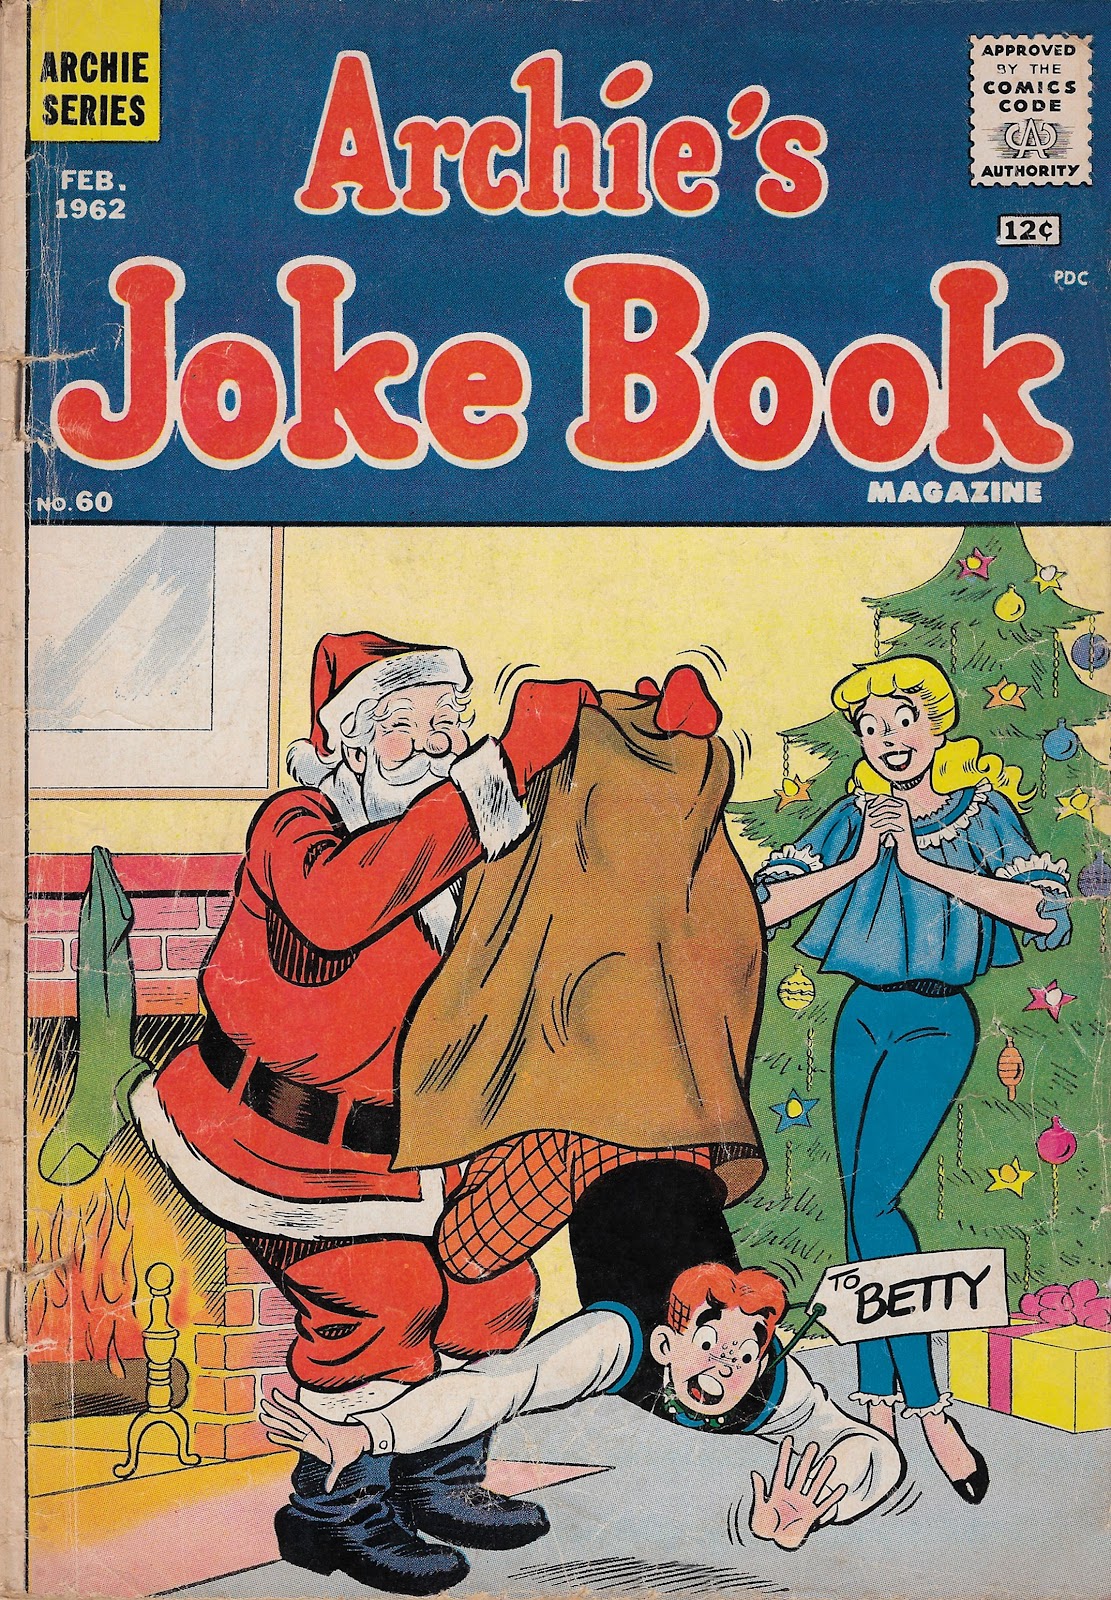 Archie's Joke Book Magazine issue 60 - Page 1